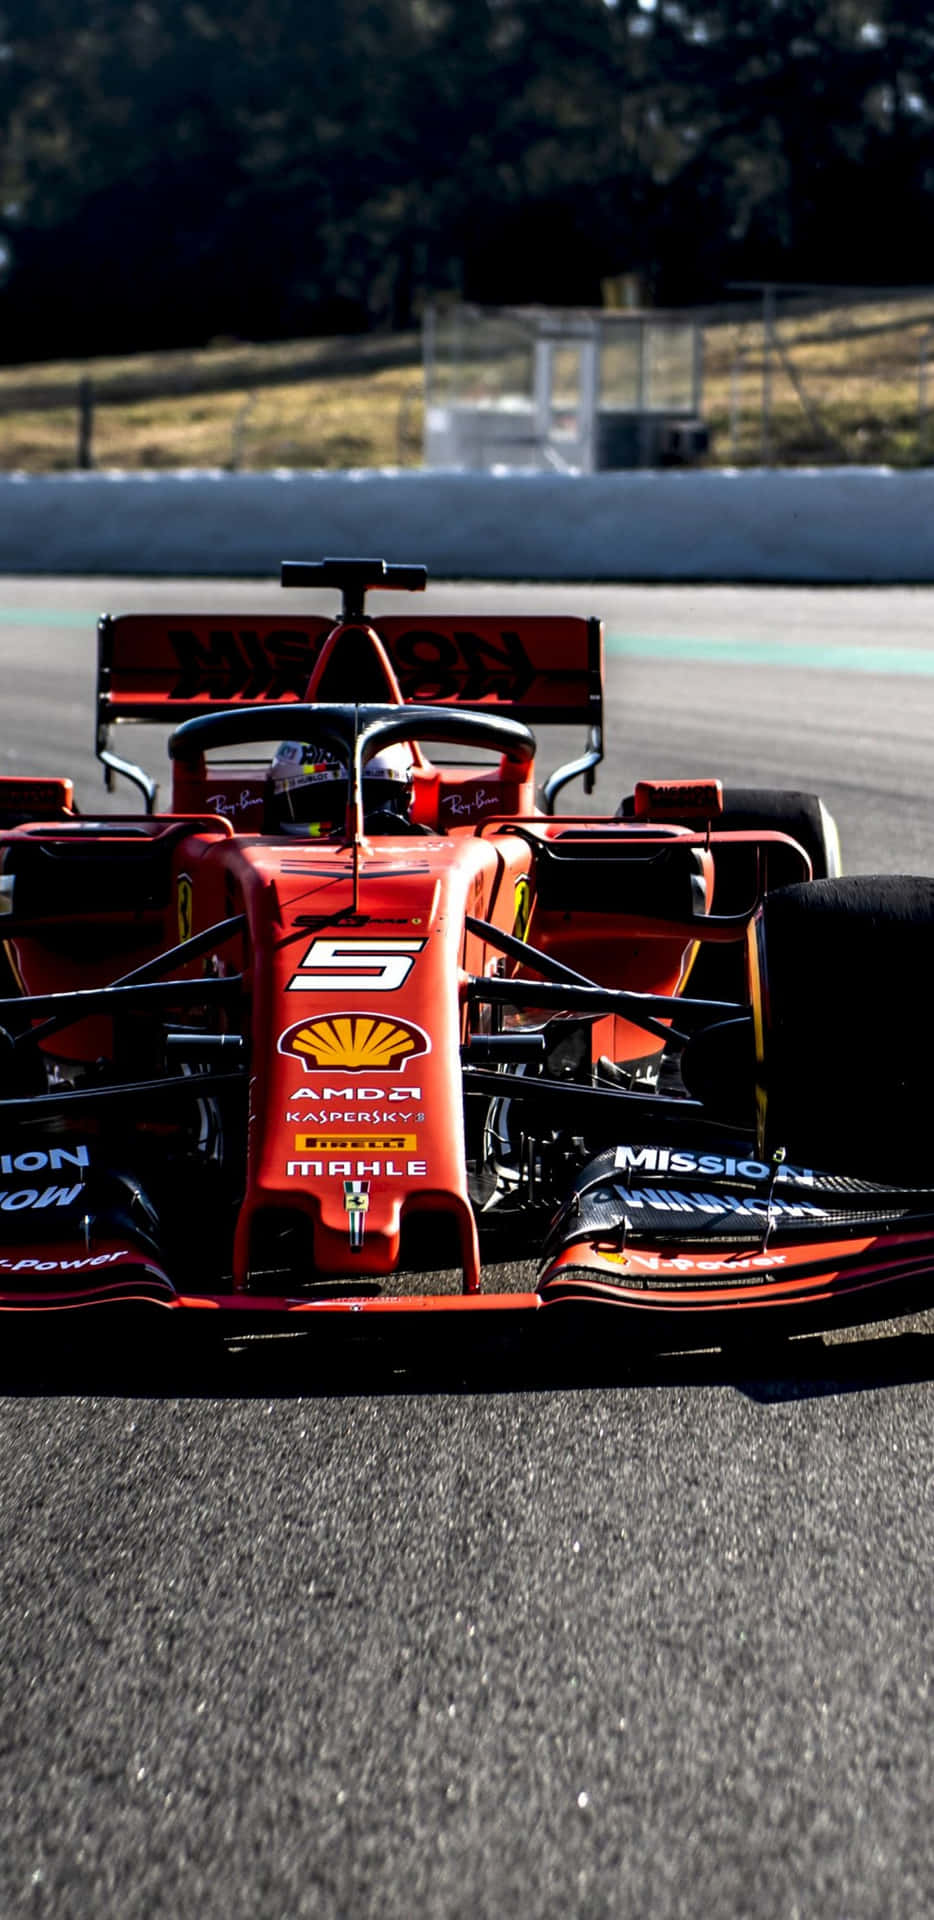 Ferrari F1 Car On A Track